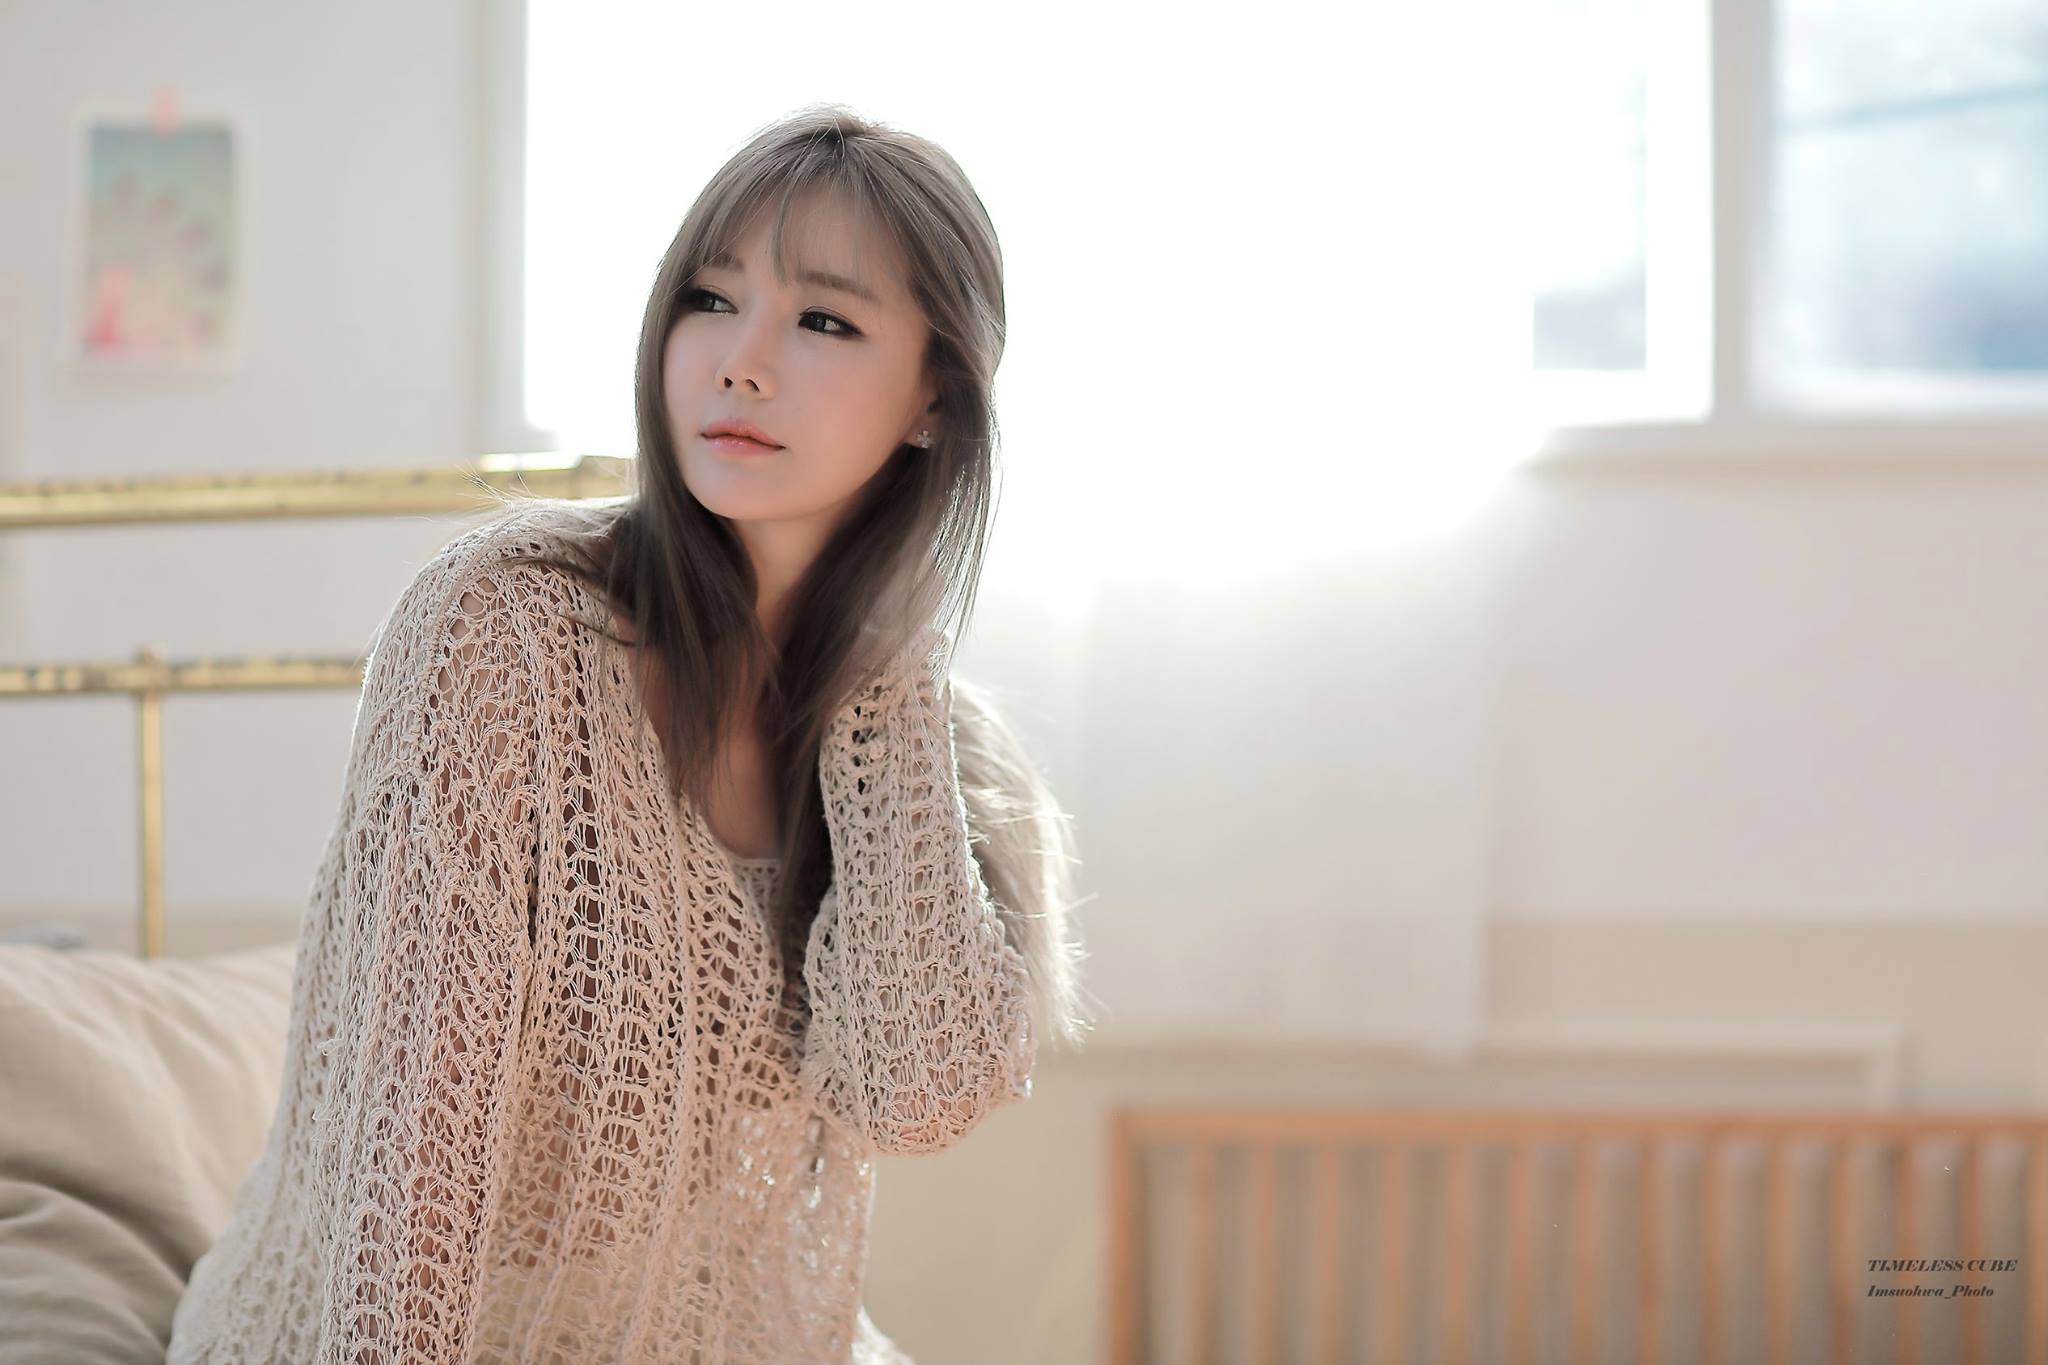 Han Ga Eun Asian Model Long Hair Loose Clothing Hands In Hair Looking Into The Distance 2048x1365